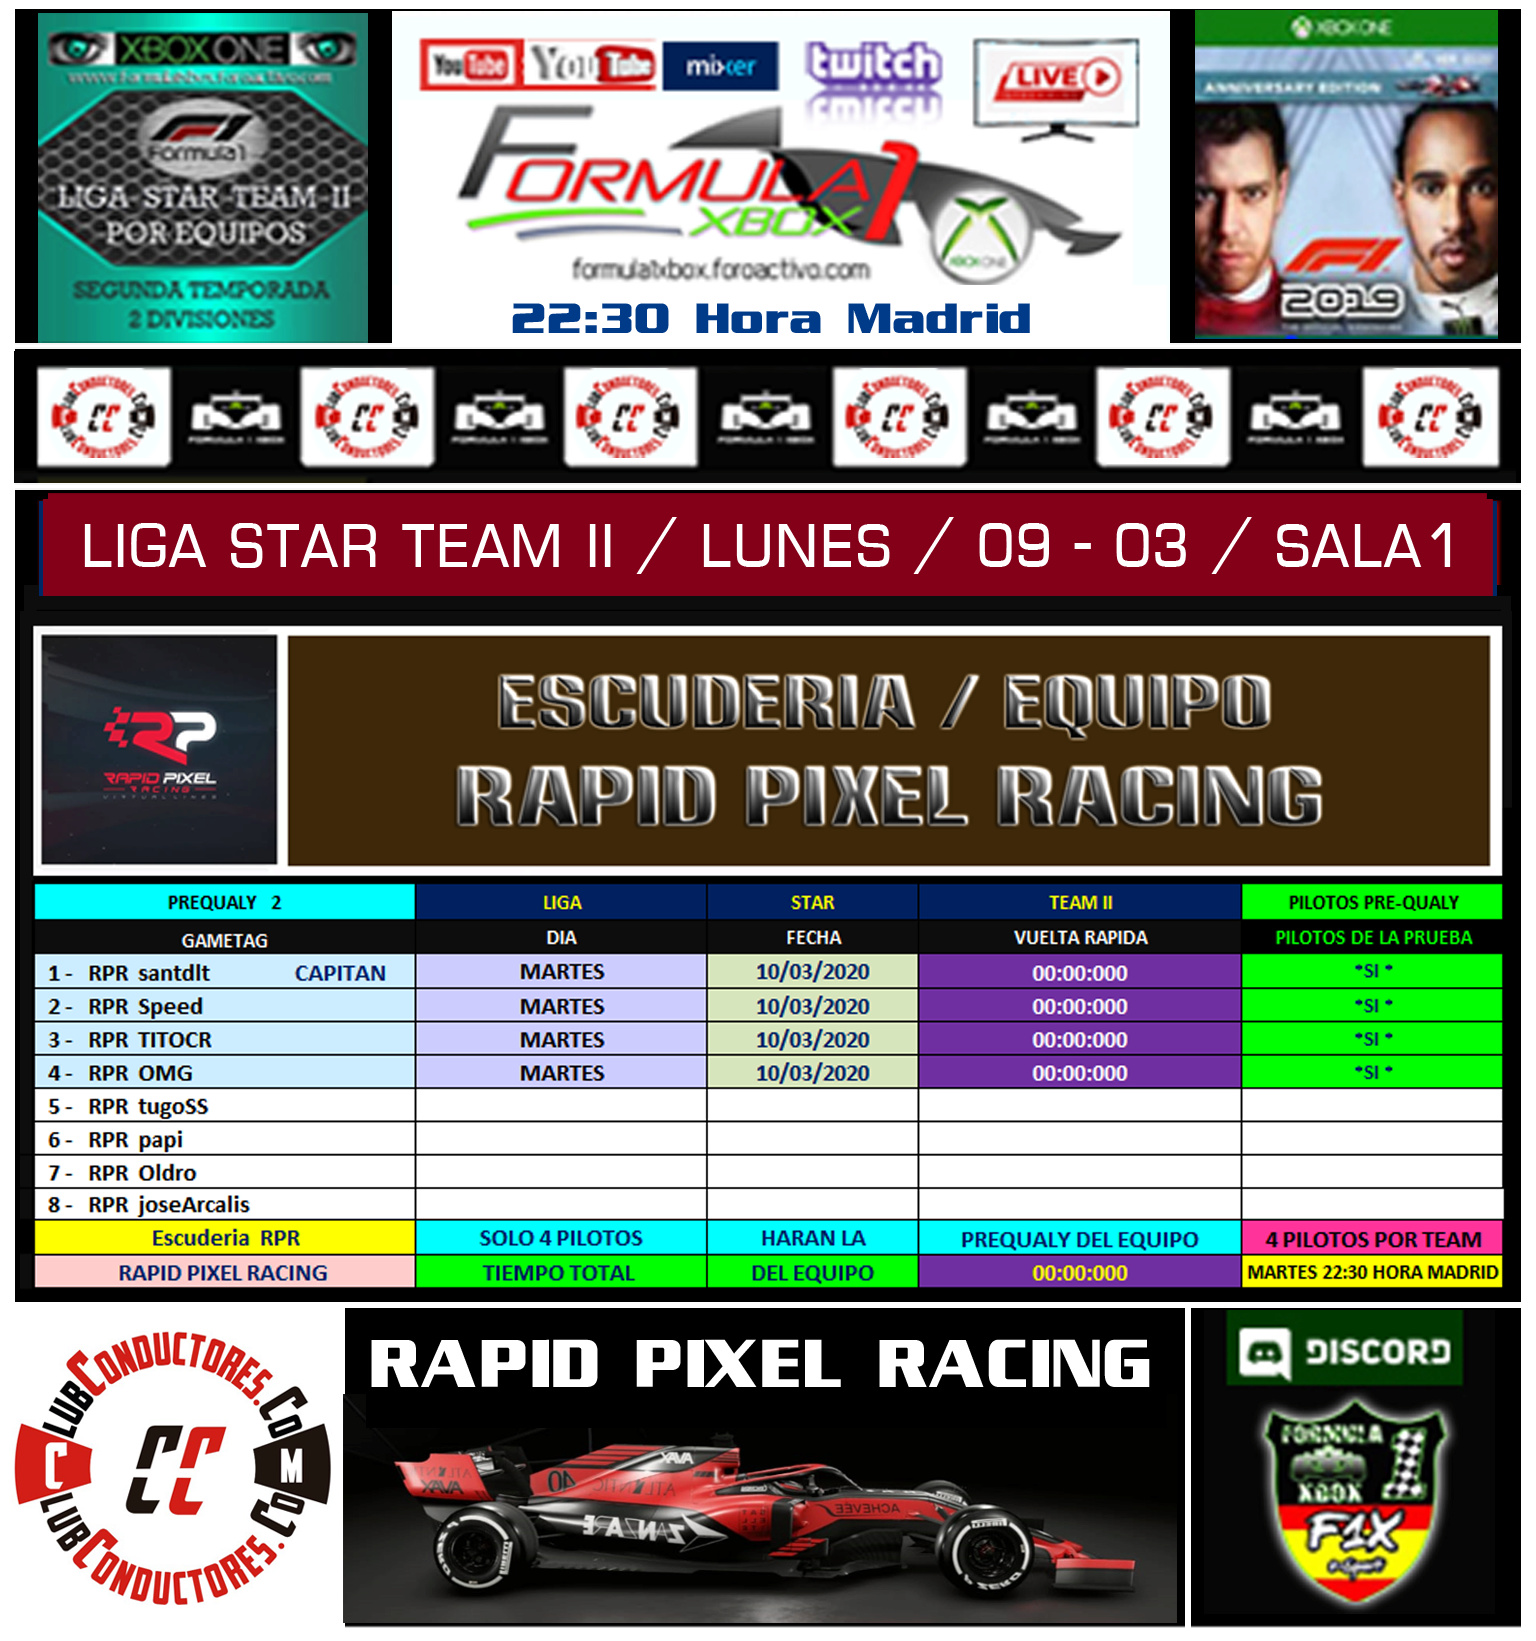 F1 2019 - XBOX ONE / LIGA STAR TEAM II - F1X / ESCUDERIA RAPID PIXEL RACING. Rpr_lu11